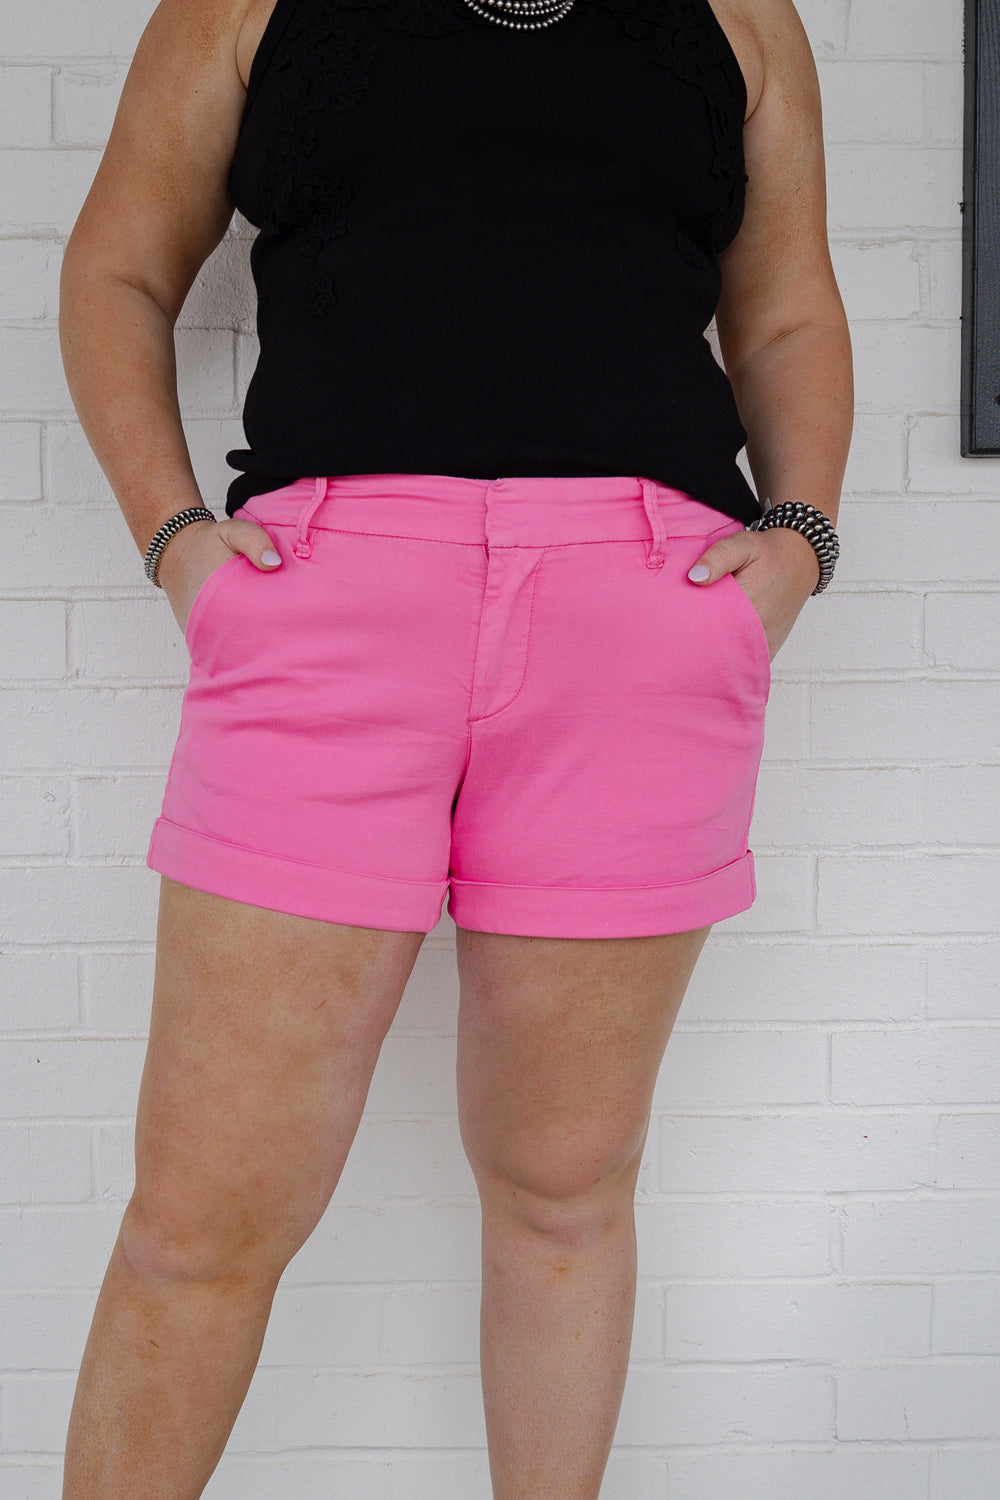 North Hampton Carnation Pink Shorts